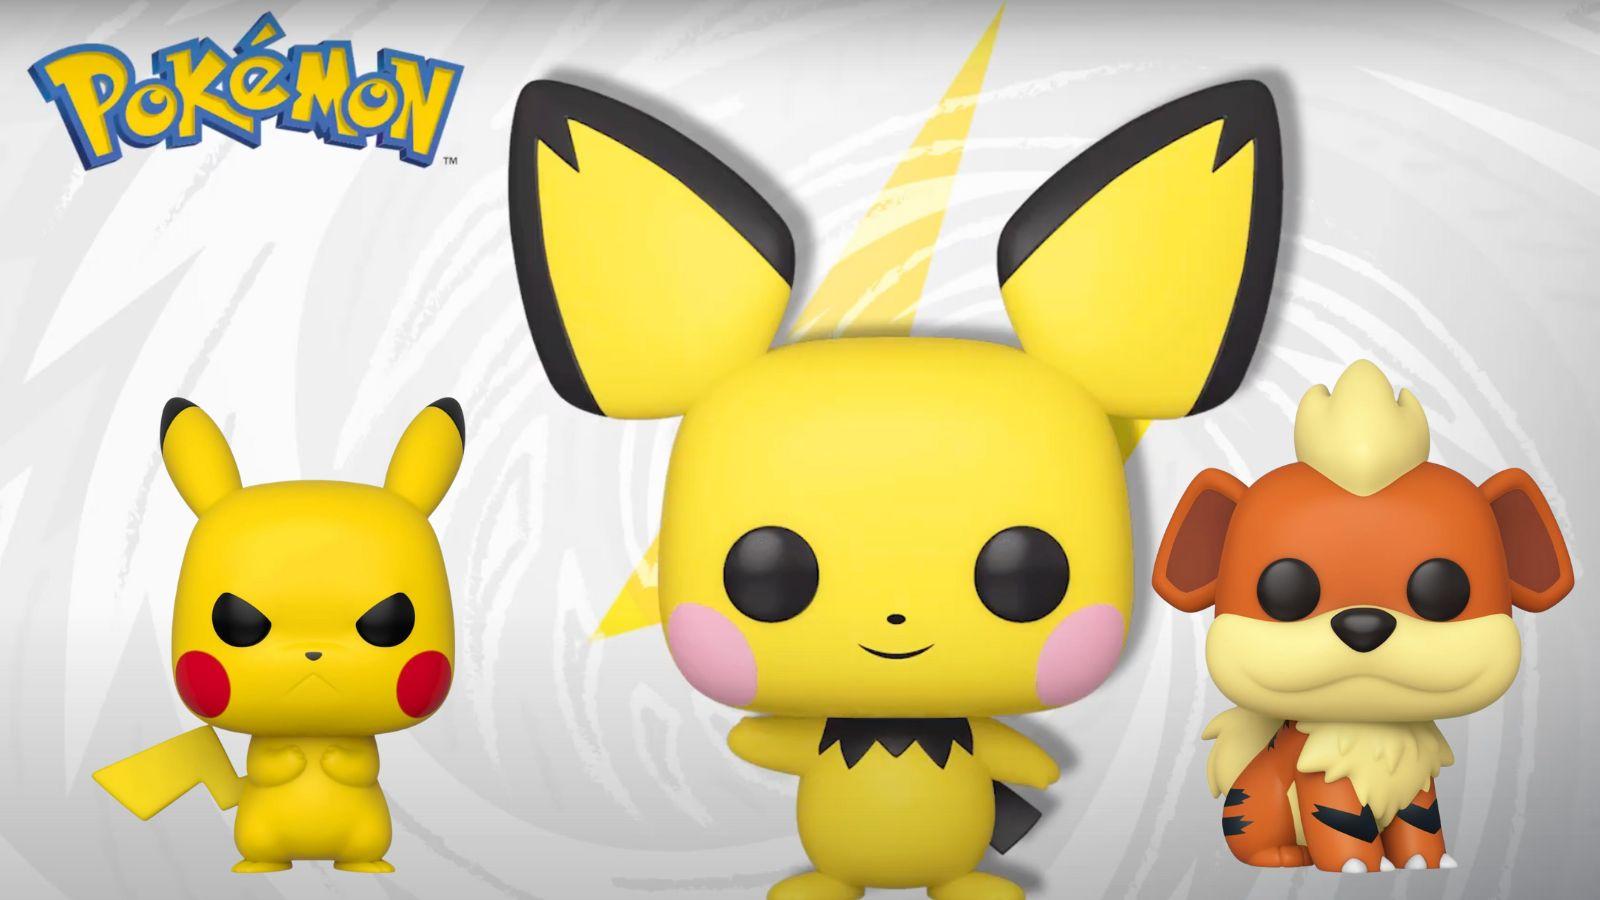 Pokemon Funko pops with Pichu, Pikachu and Growlithe